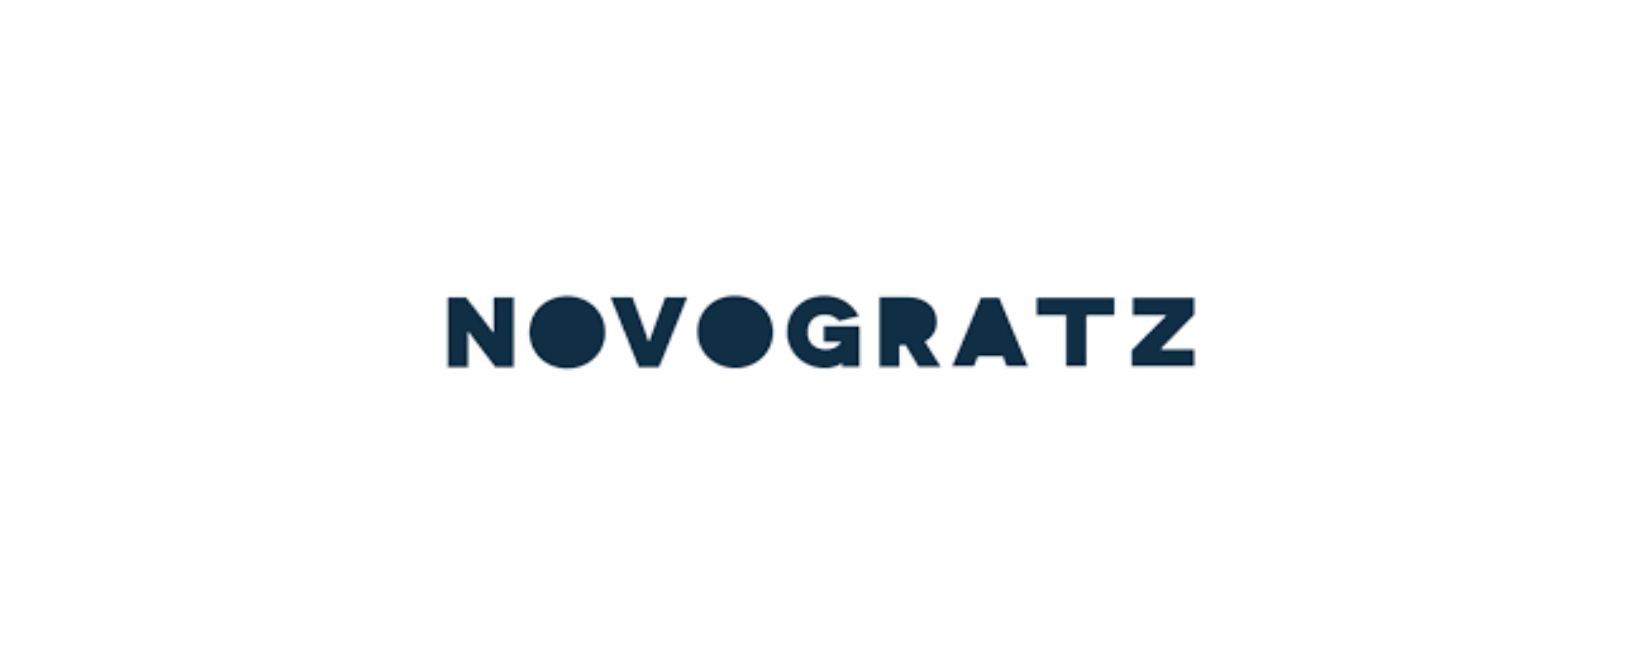 The Novogratz Discount Code 2022